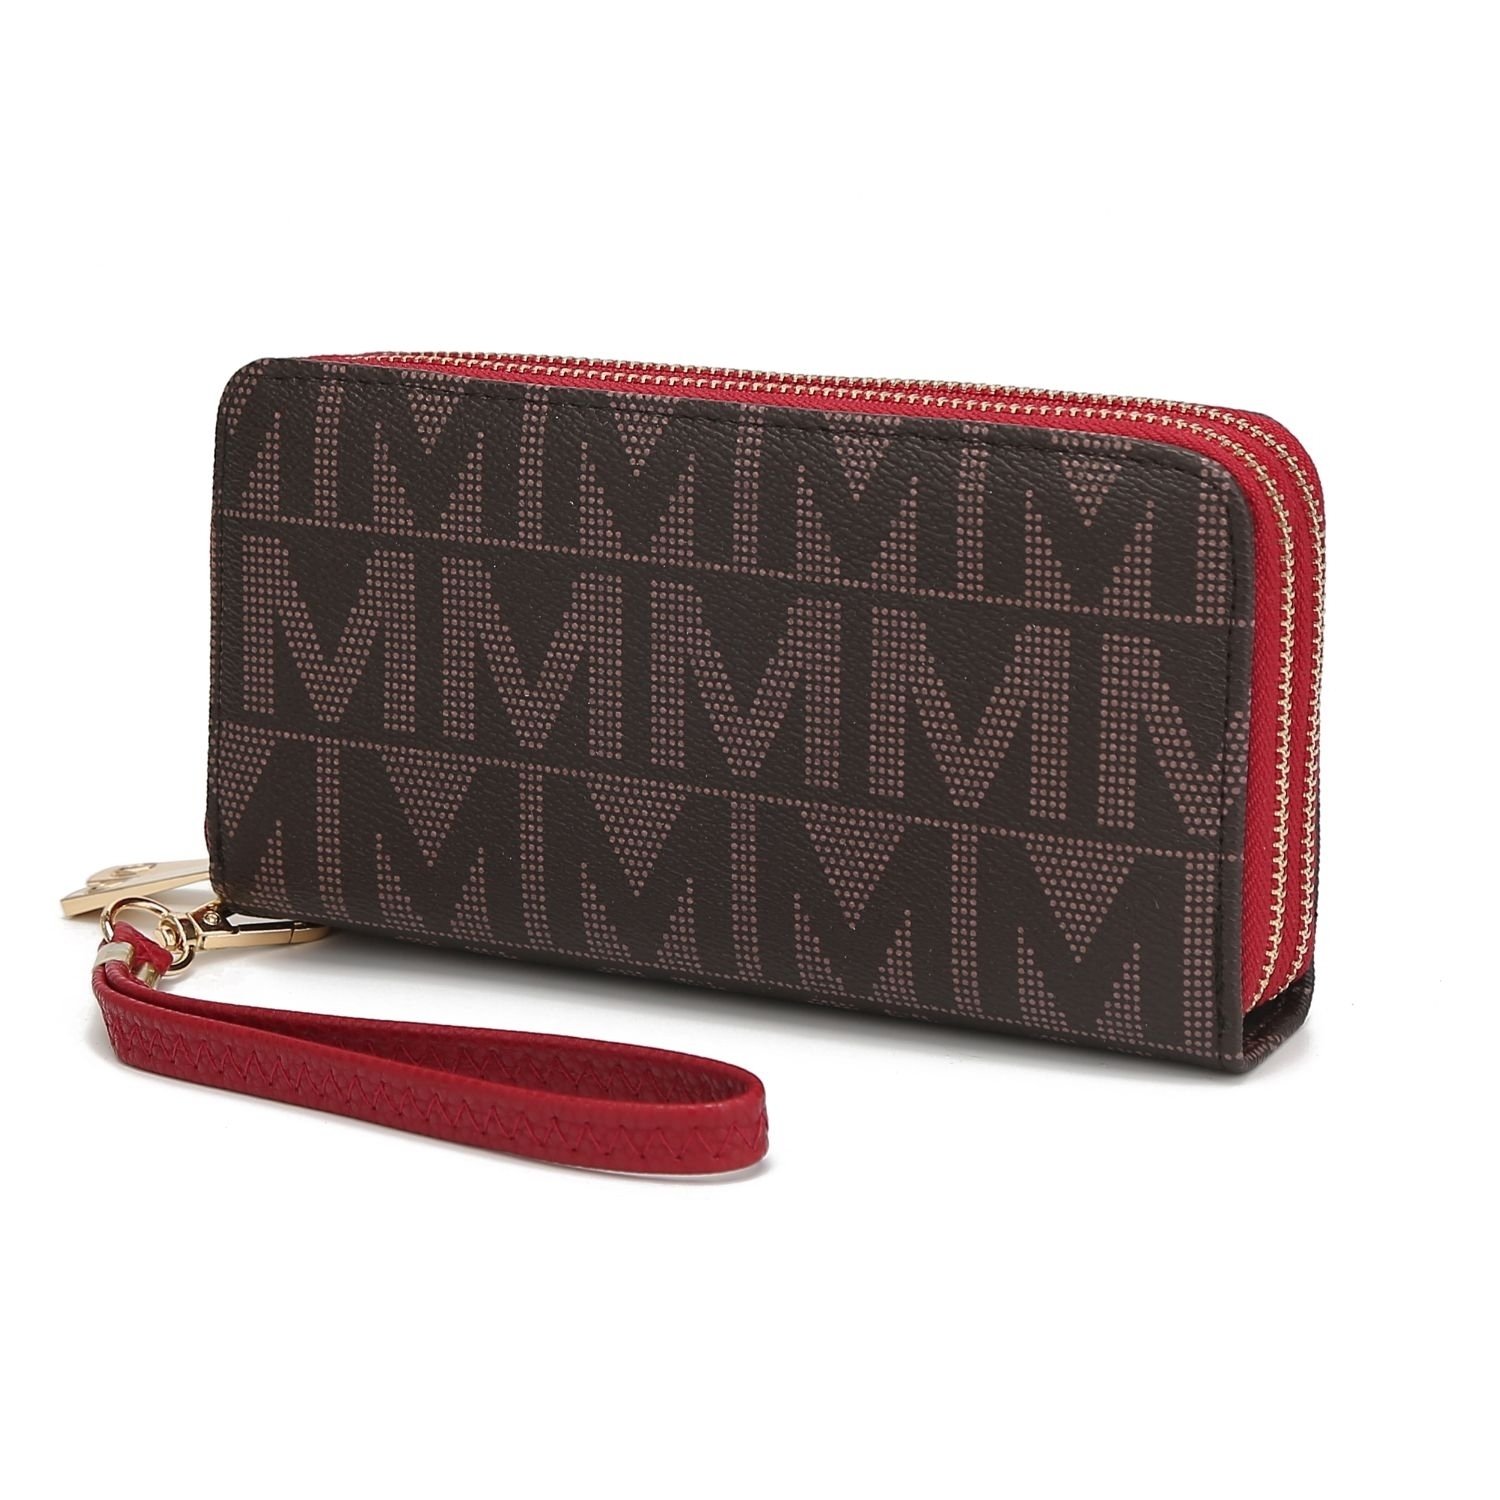 MKF Collection Danielle Milan M Signature Wallet Wristlet By Mia K. Handbag - Red